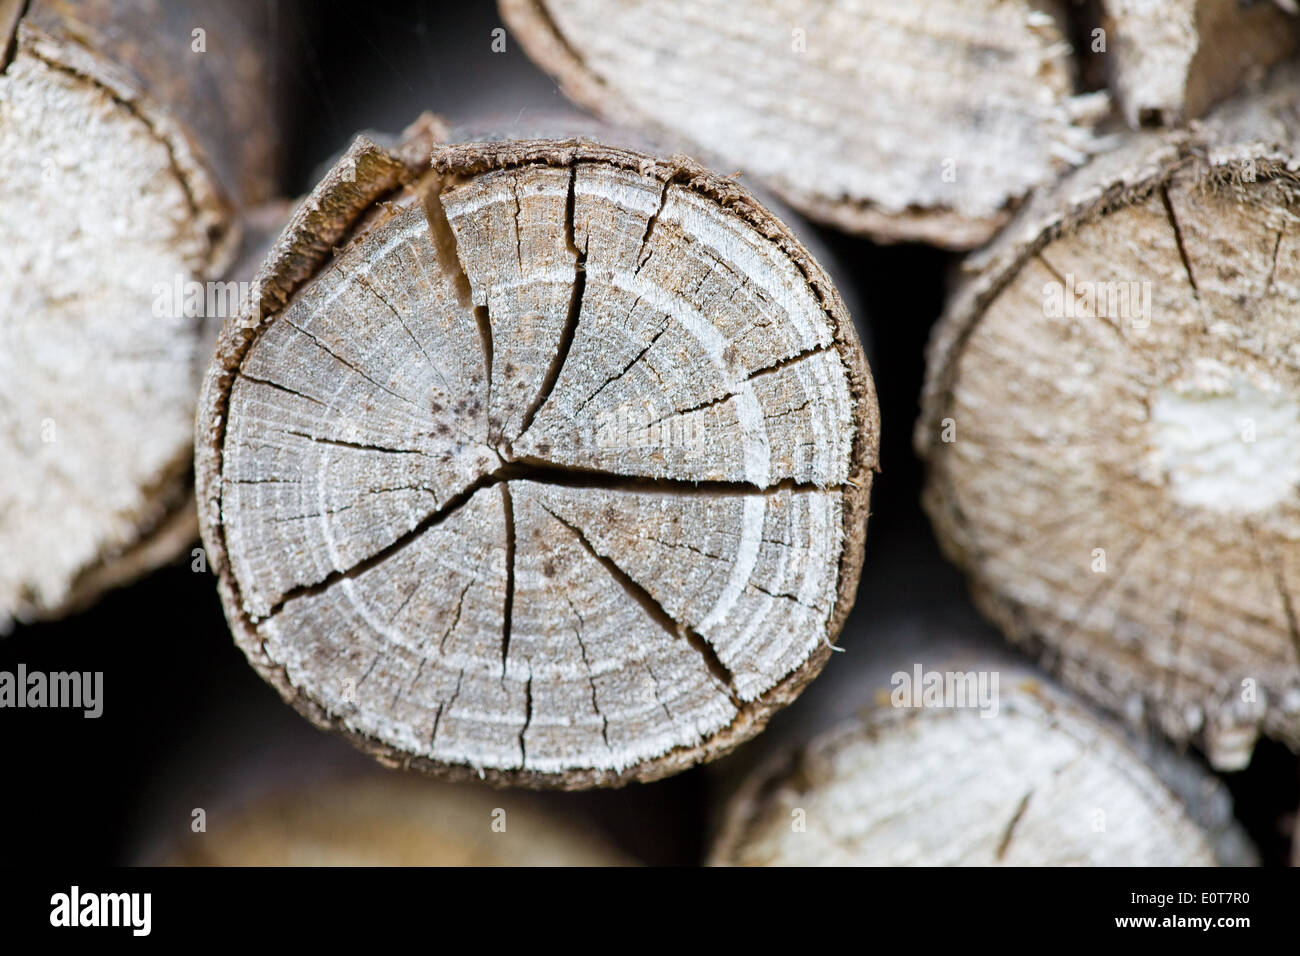 Brennholzstapel - firewood Stock Photo